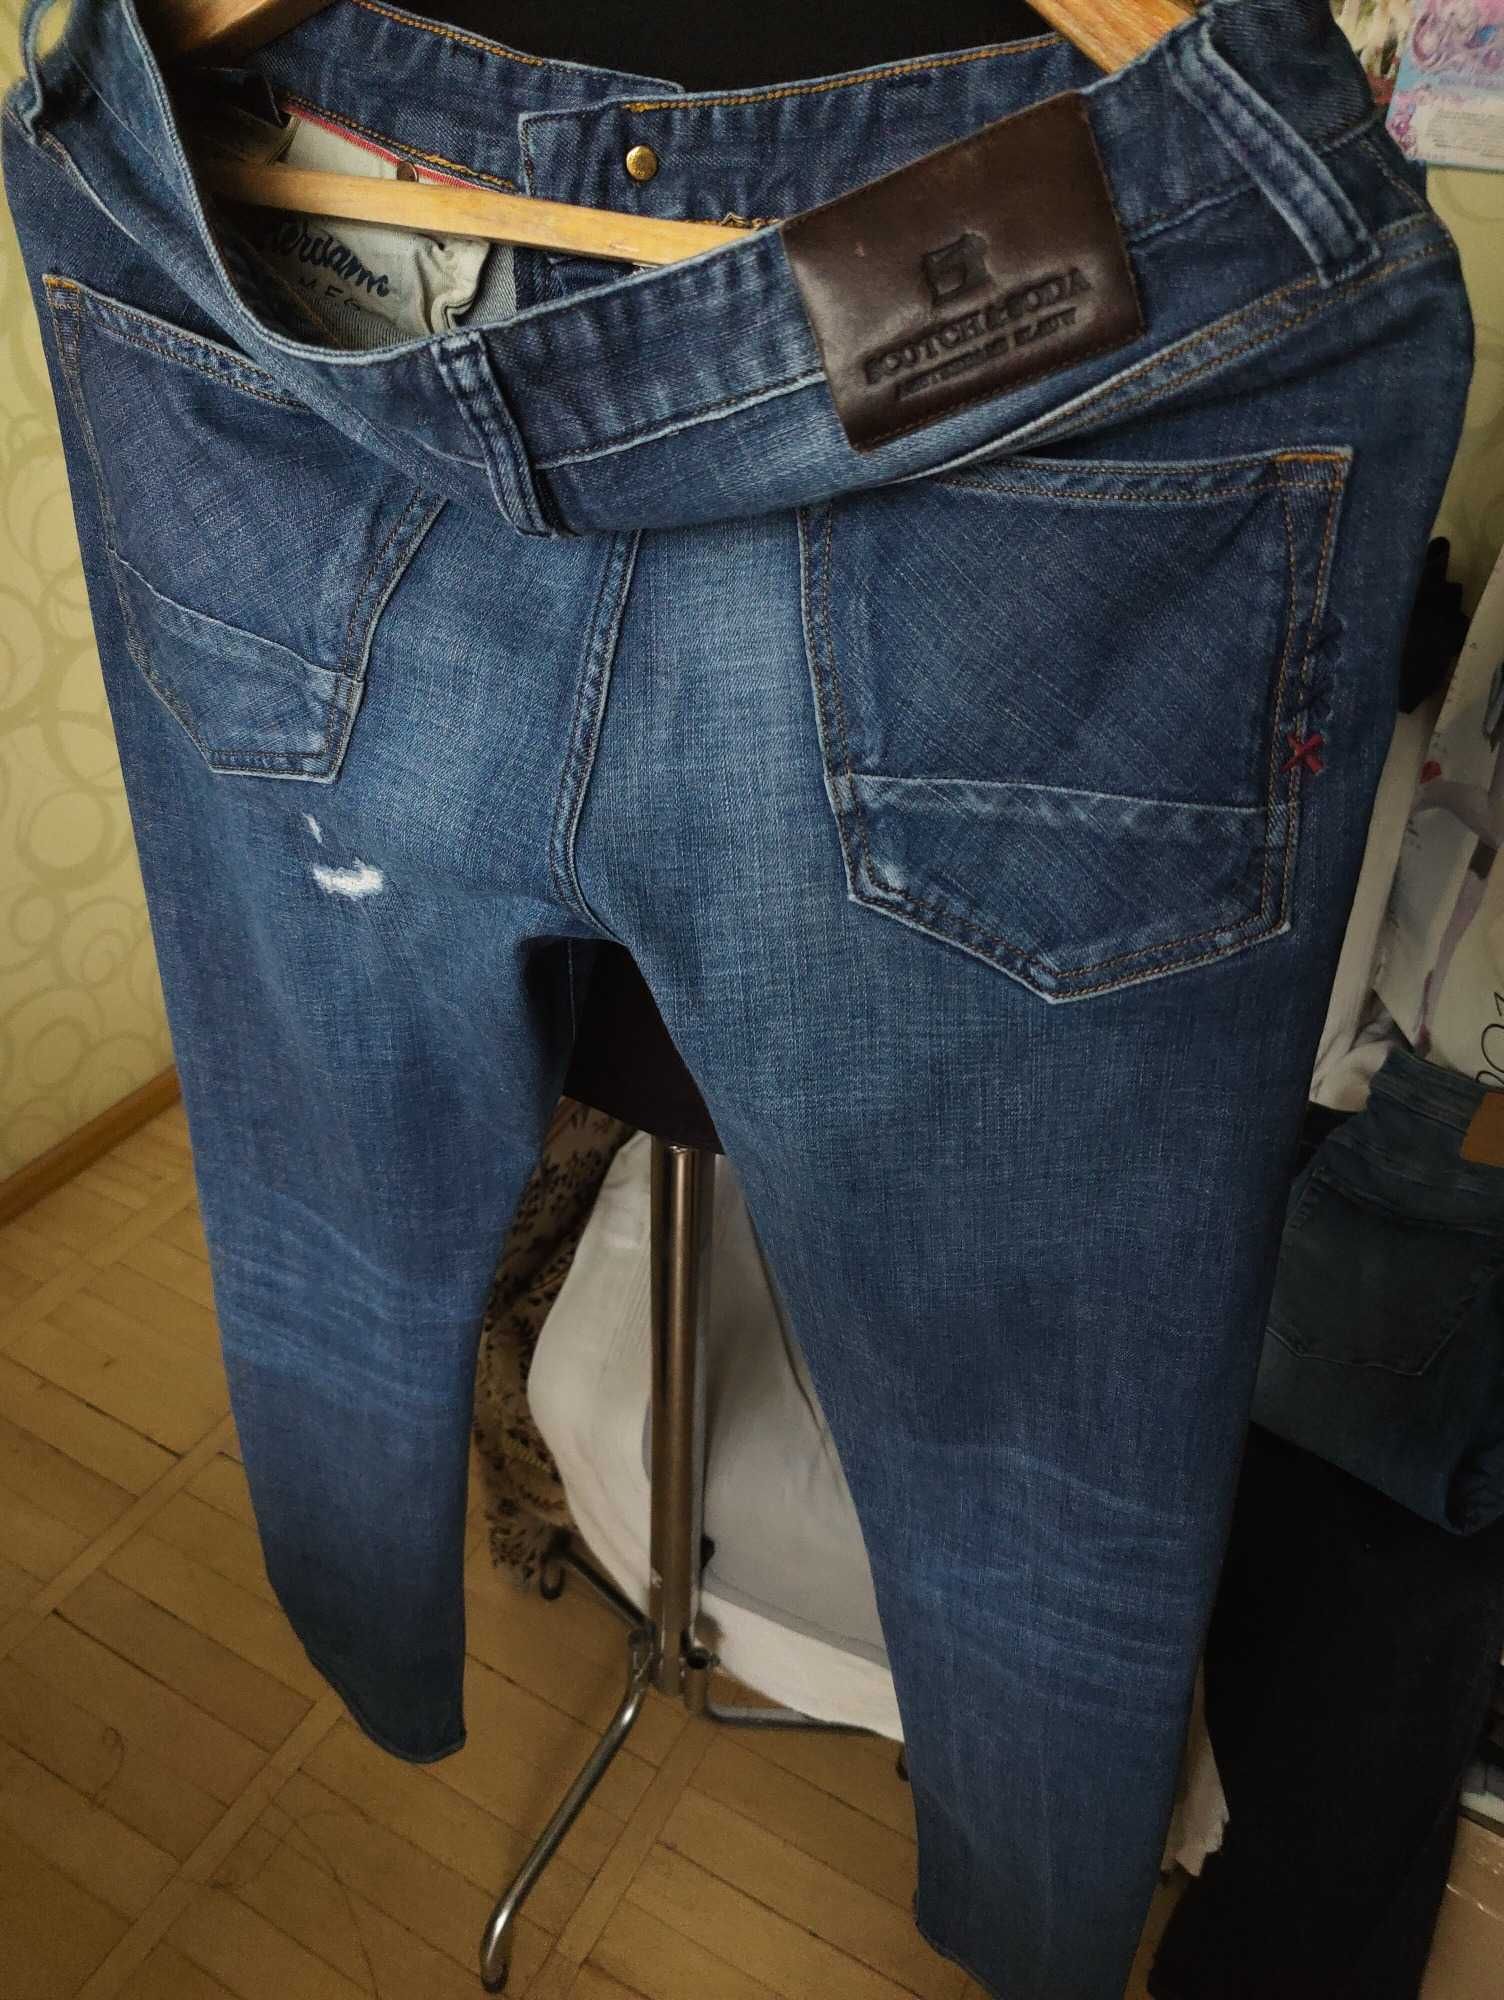 Джинсы Scotch&Soda Ralston ripped jeans Дания w31 stretch mid blue.